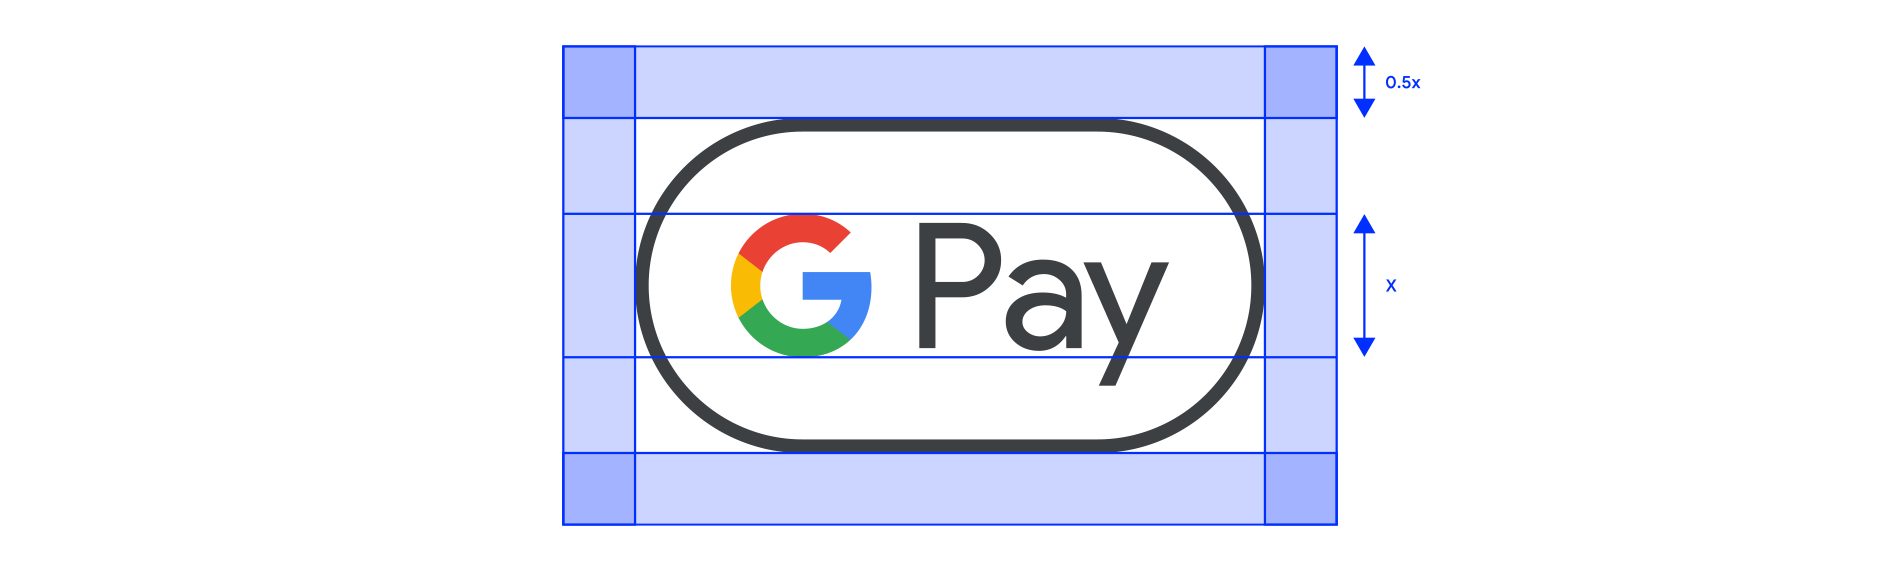 Google Pay 표시 여백 예시